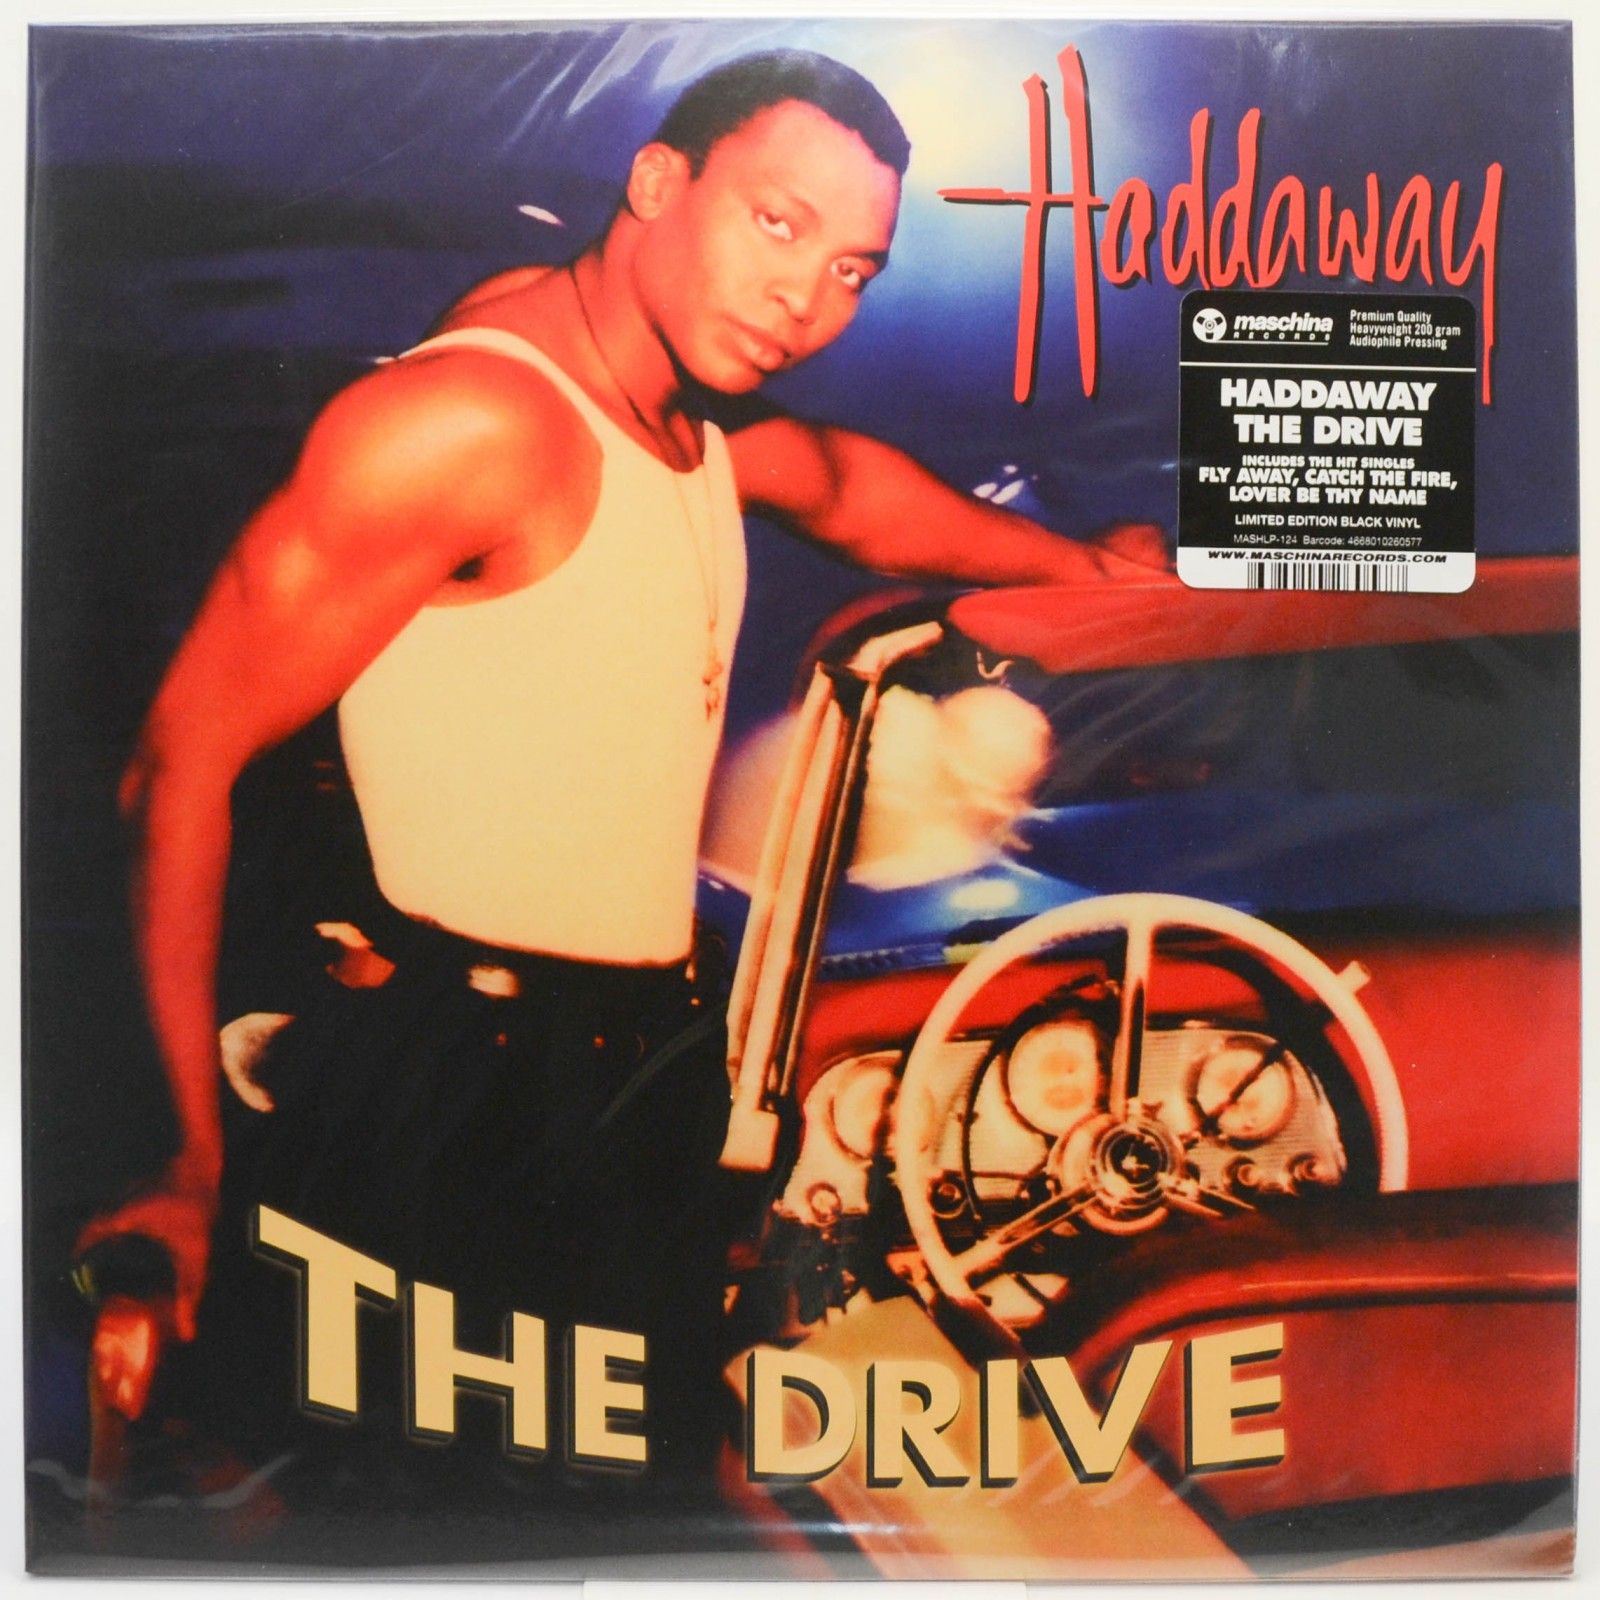 Haddaway — The Drive, 1995